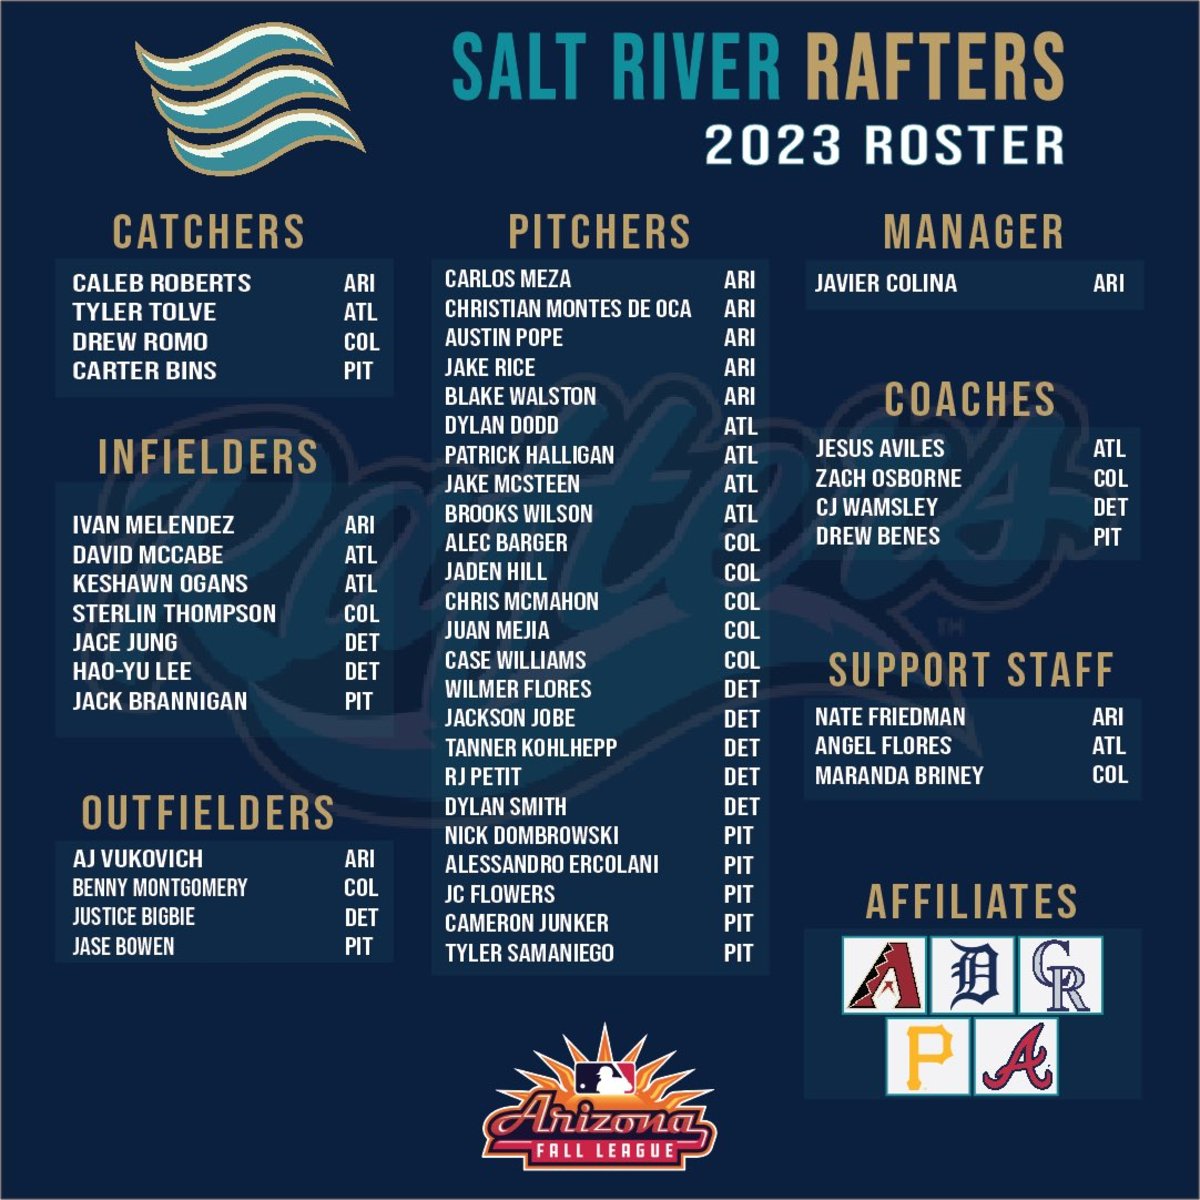 Arizona Fall League roster for Salt River